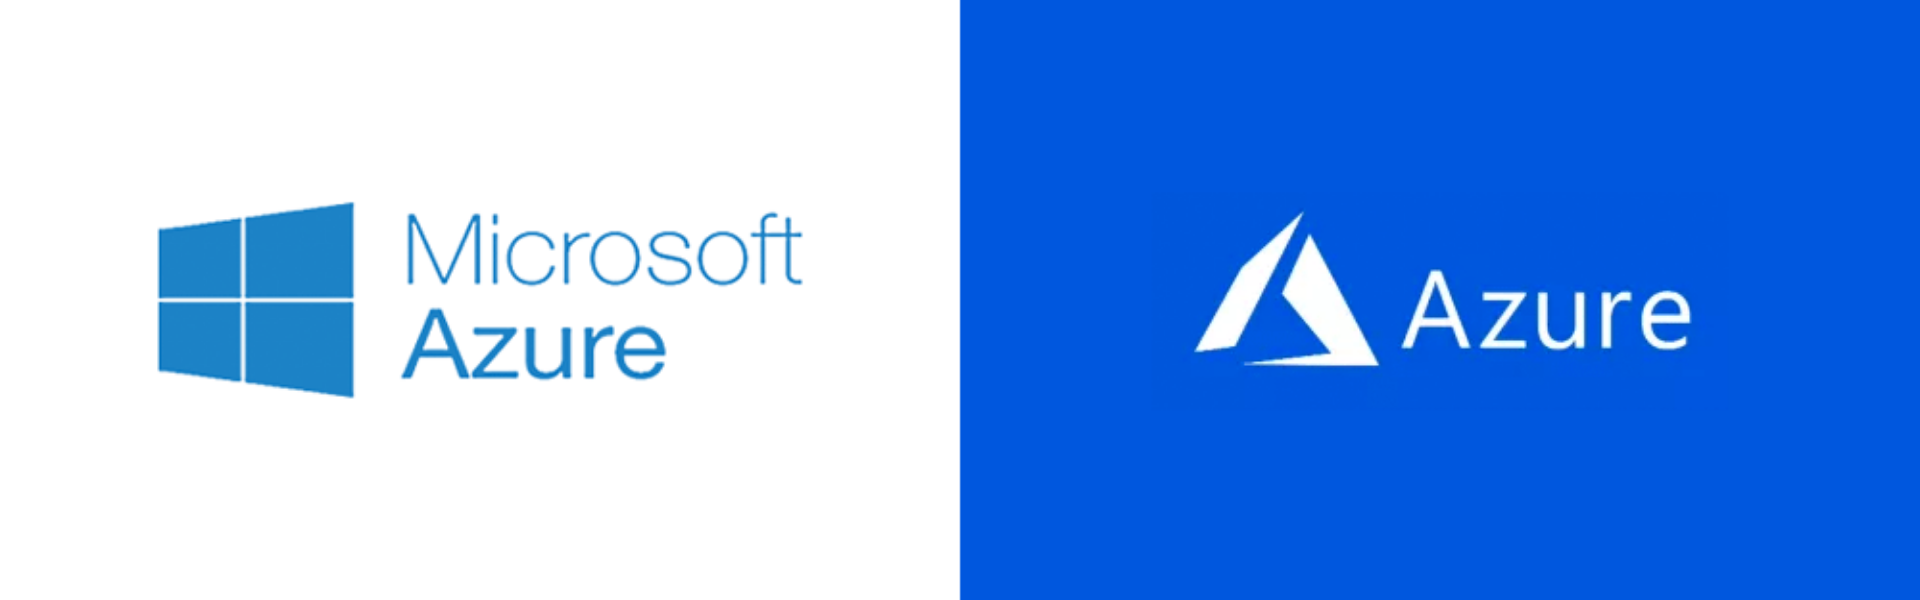 Microsoft Azure Banner